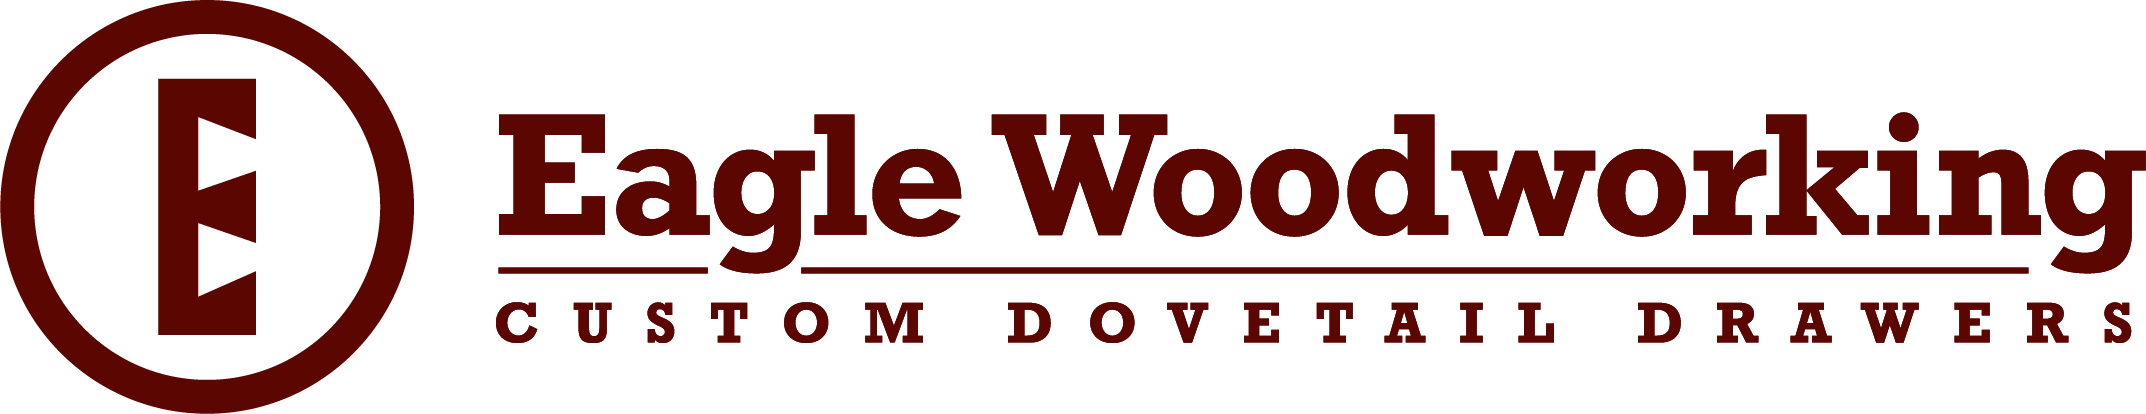 Eagle Dovetail Drawers logo